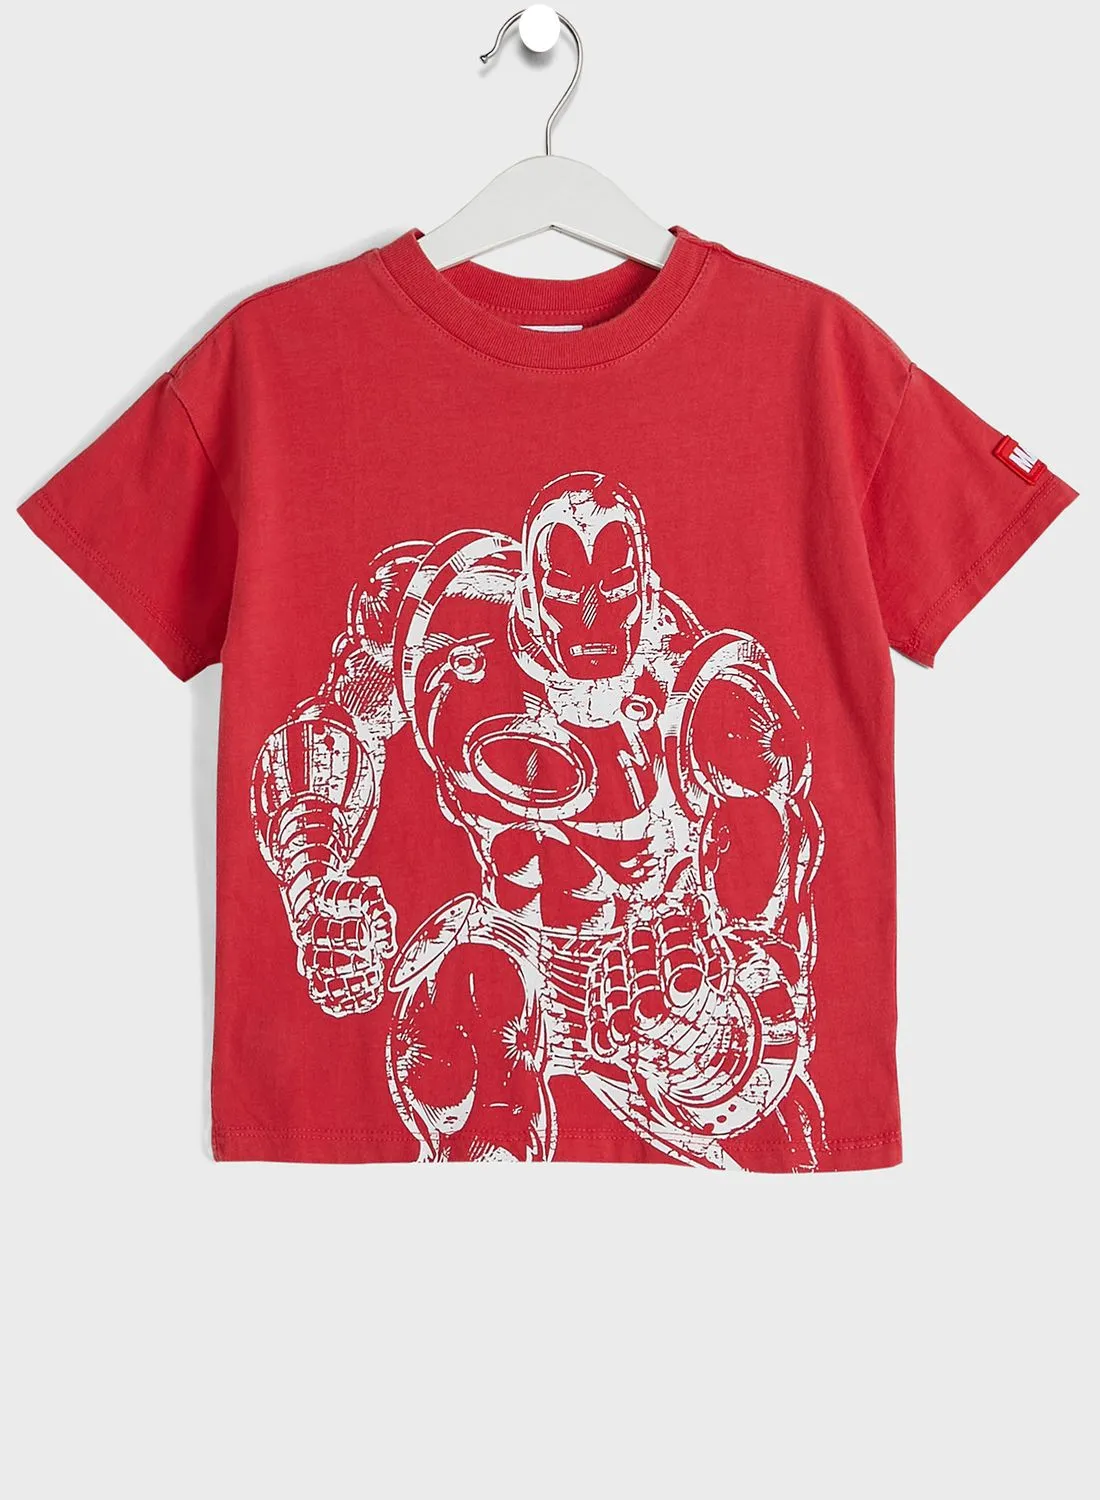 Cotton On Kids Iron Man Crew Neck T-Shirt